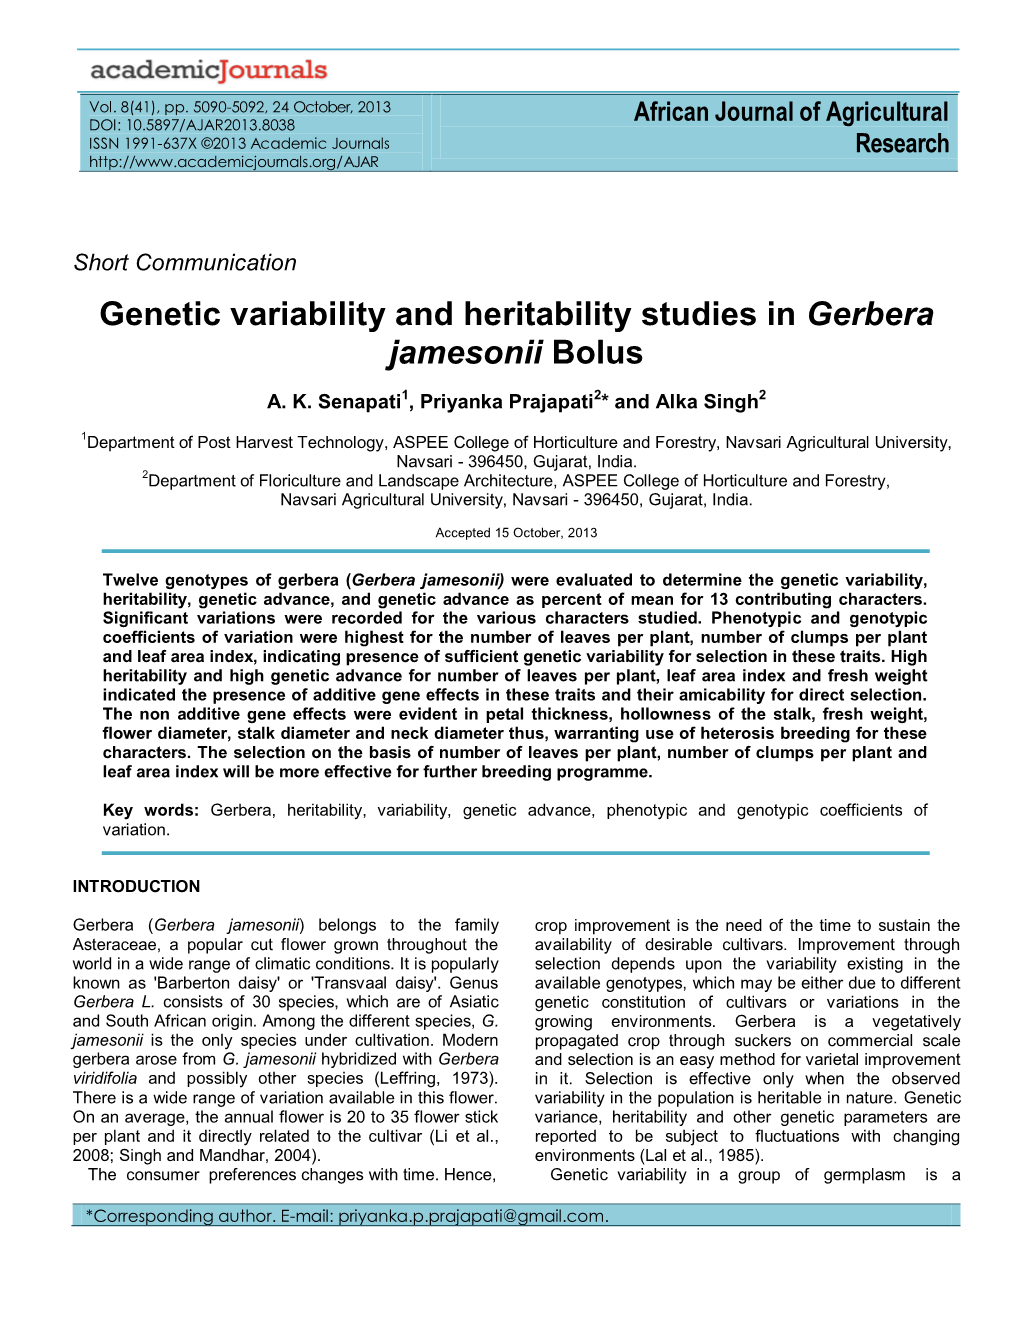 Genetic Variability and Heritability Studies in Gerbera Jamesonii Bolus